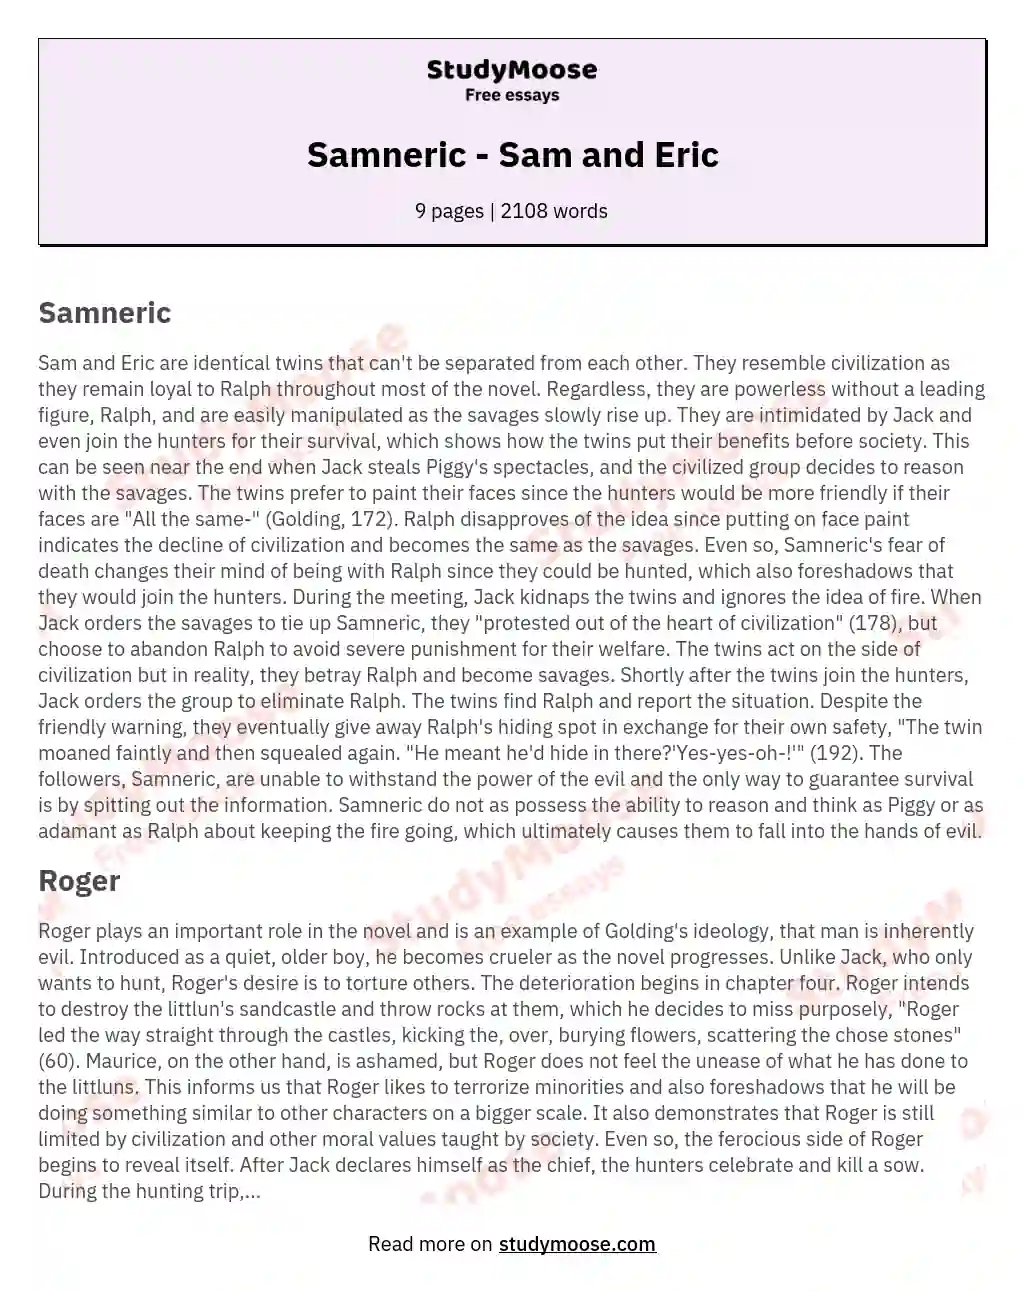 Samneric - Sam and Eric essay